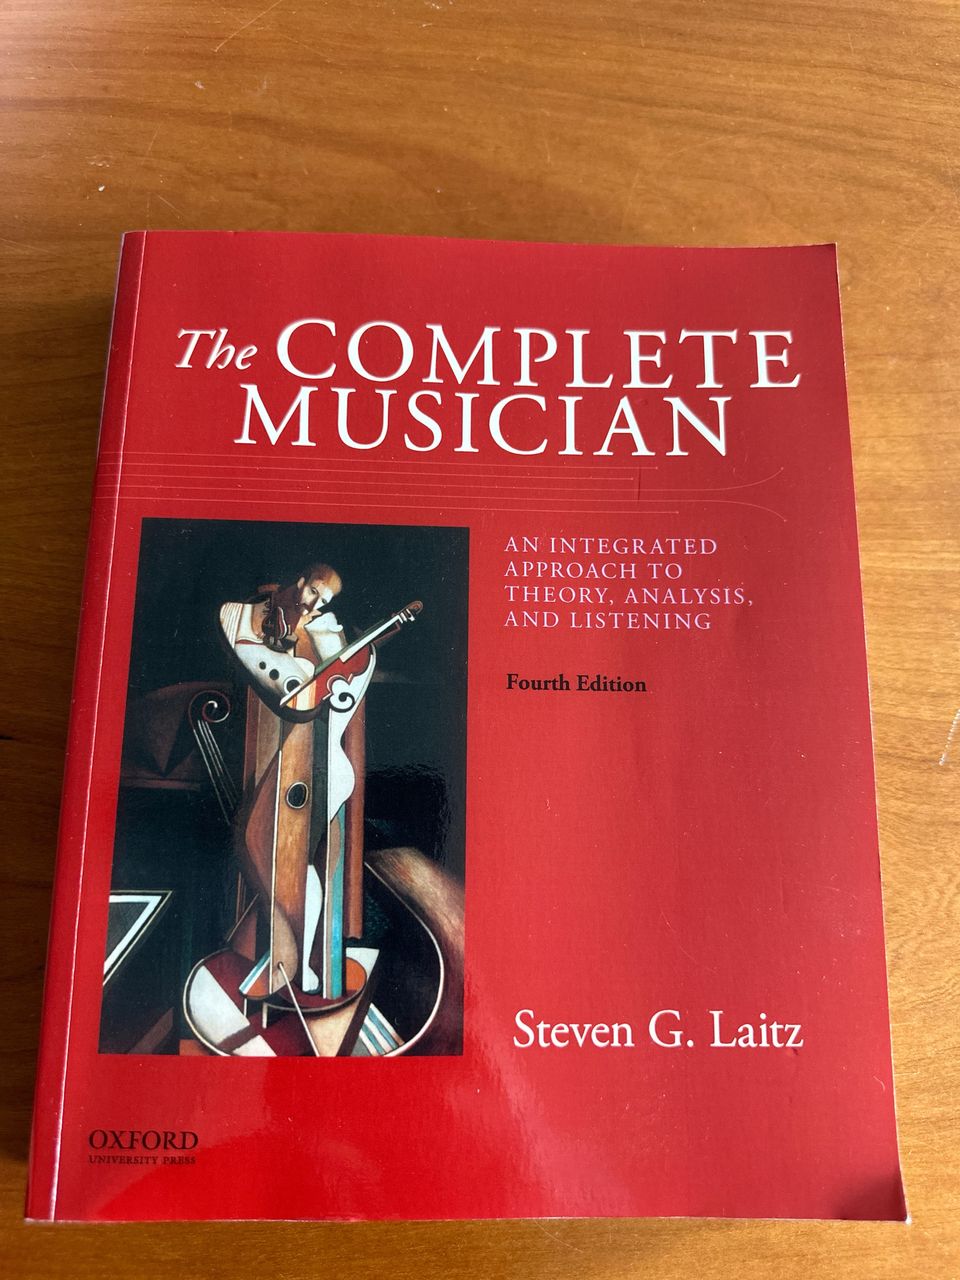 The Complete Musician Laitz Steven G.